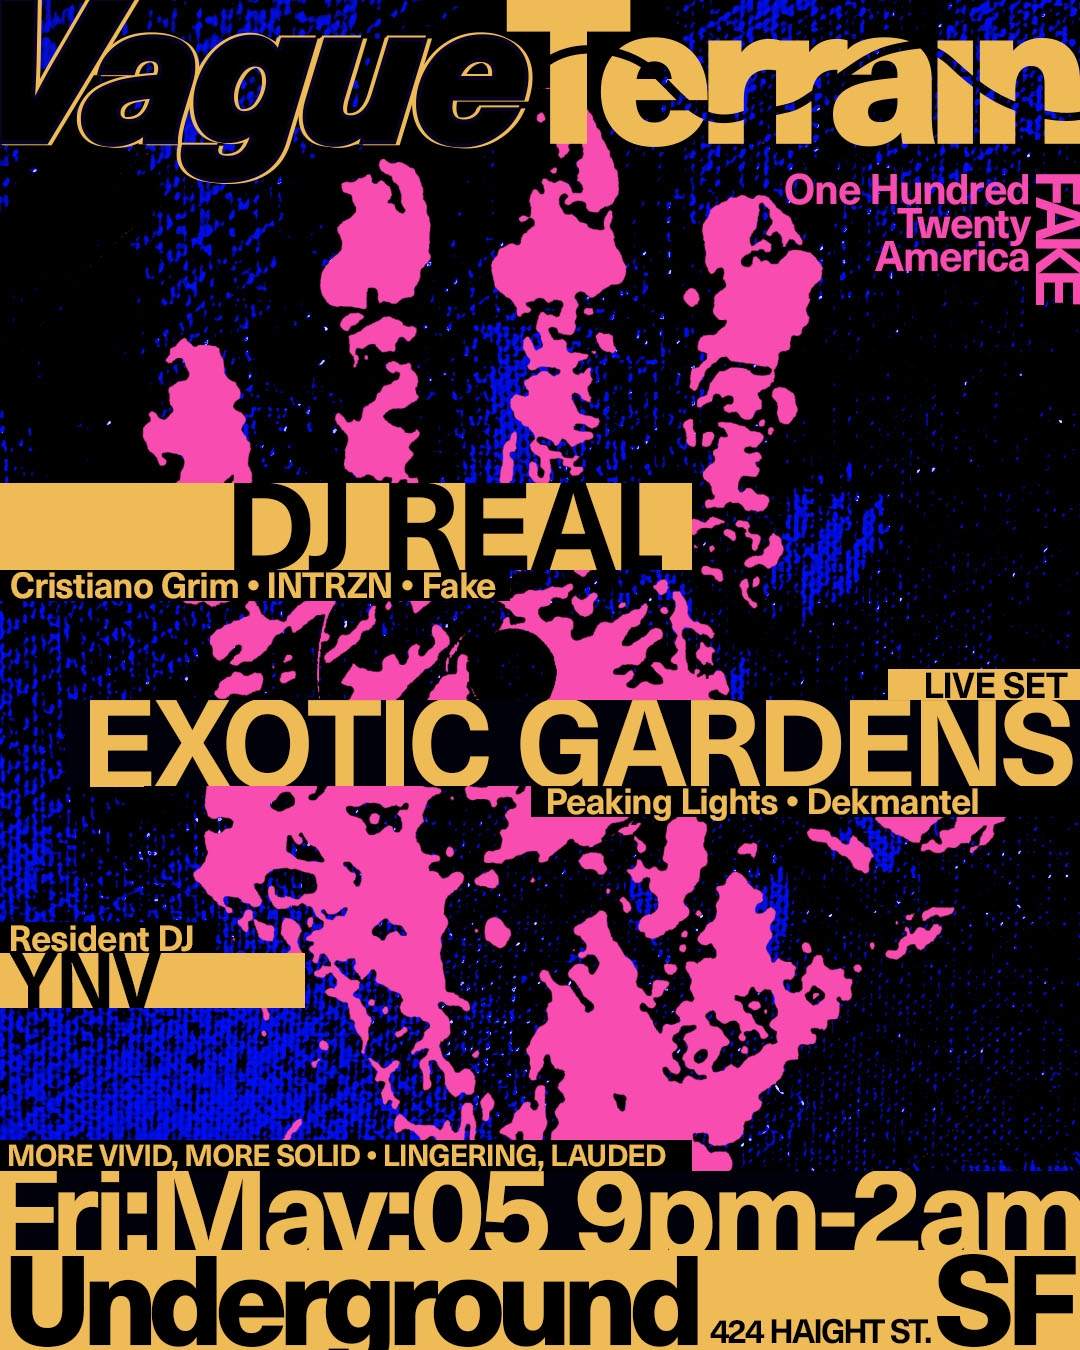 Vague Terrain with Exotic Gardens + DJ REAL - Página frontal